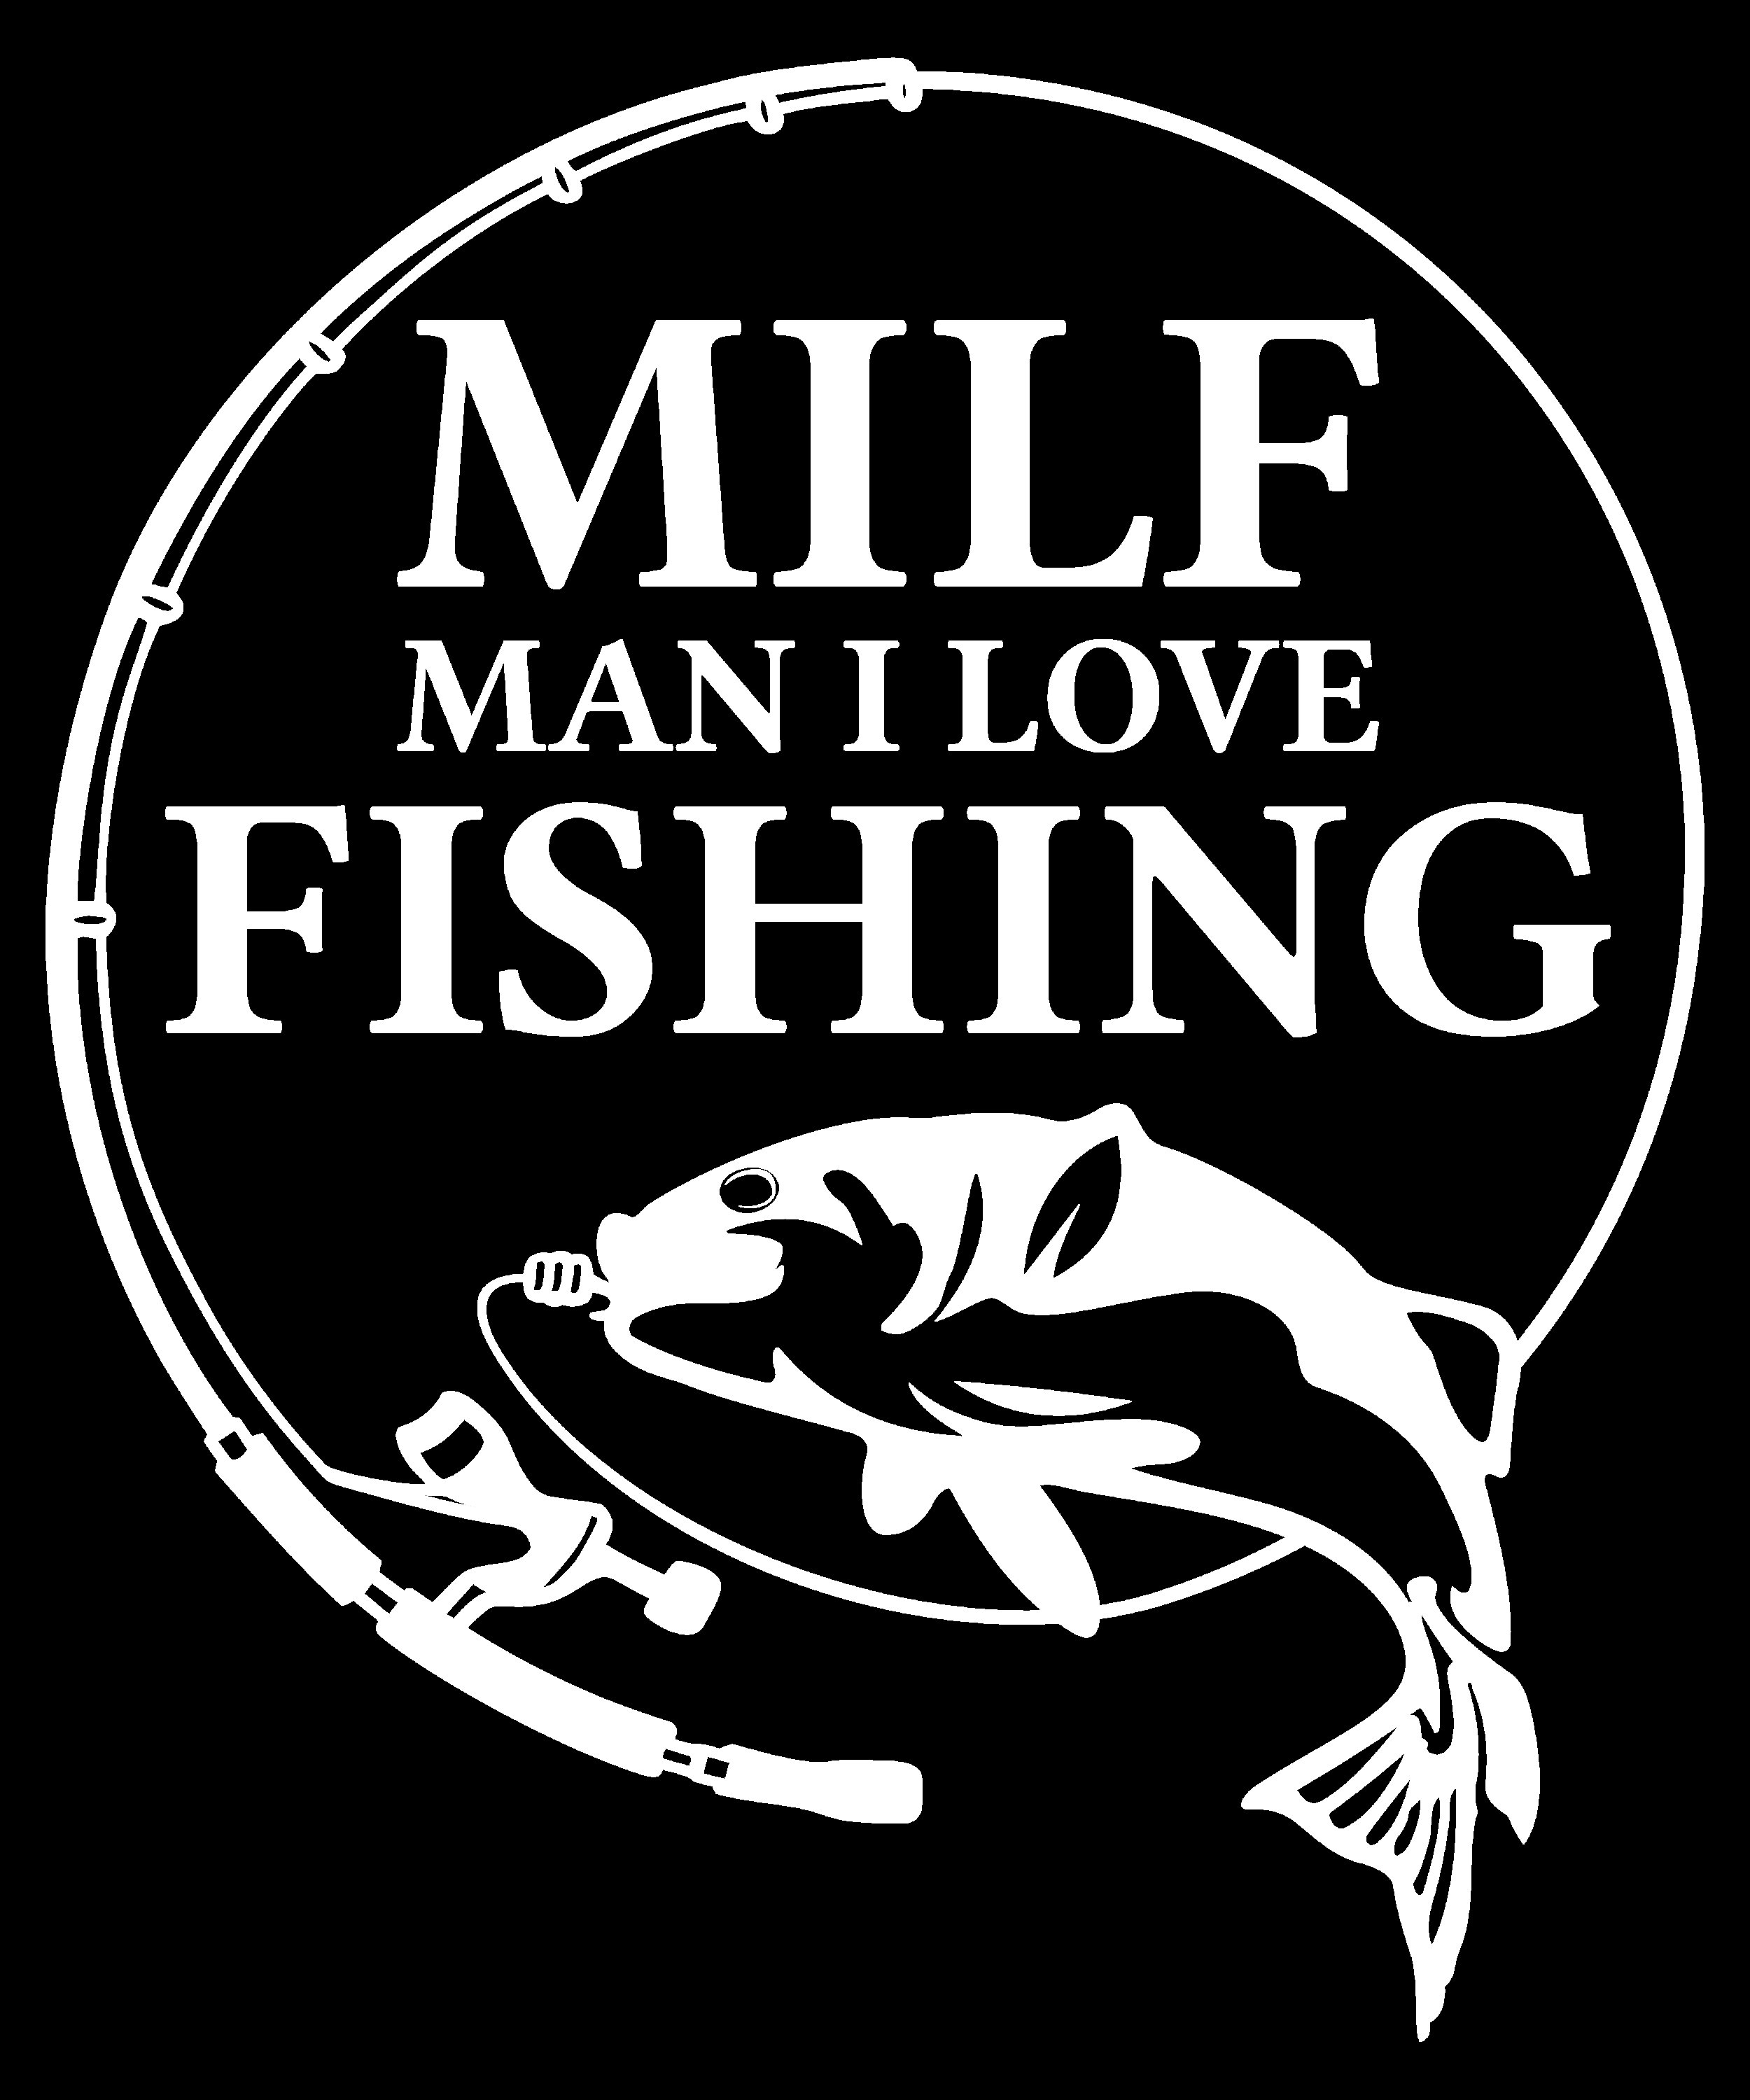 MILF Cricut Man I Love Fishing svg Classic milf humor